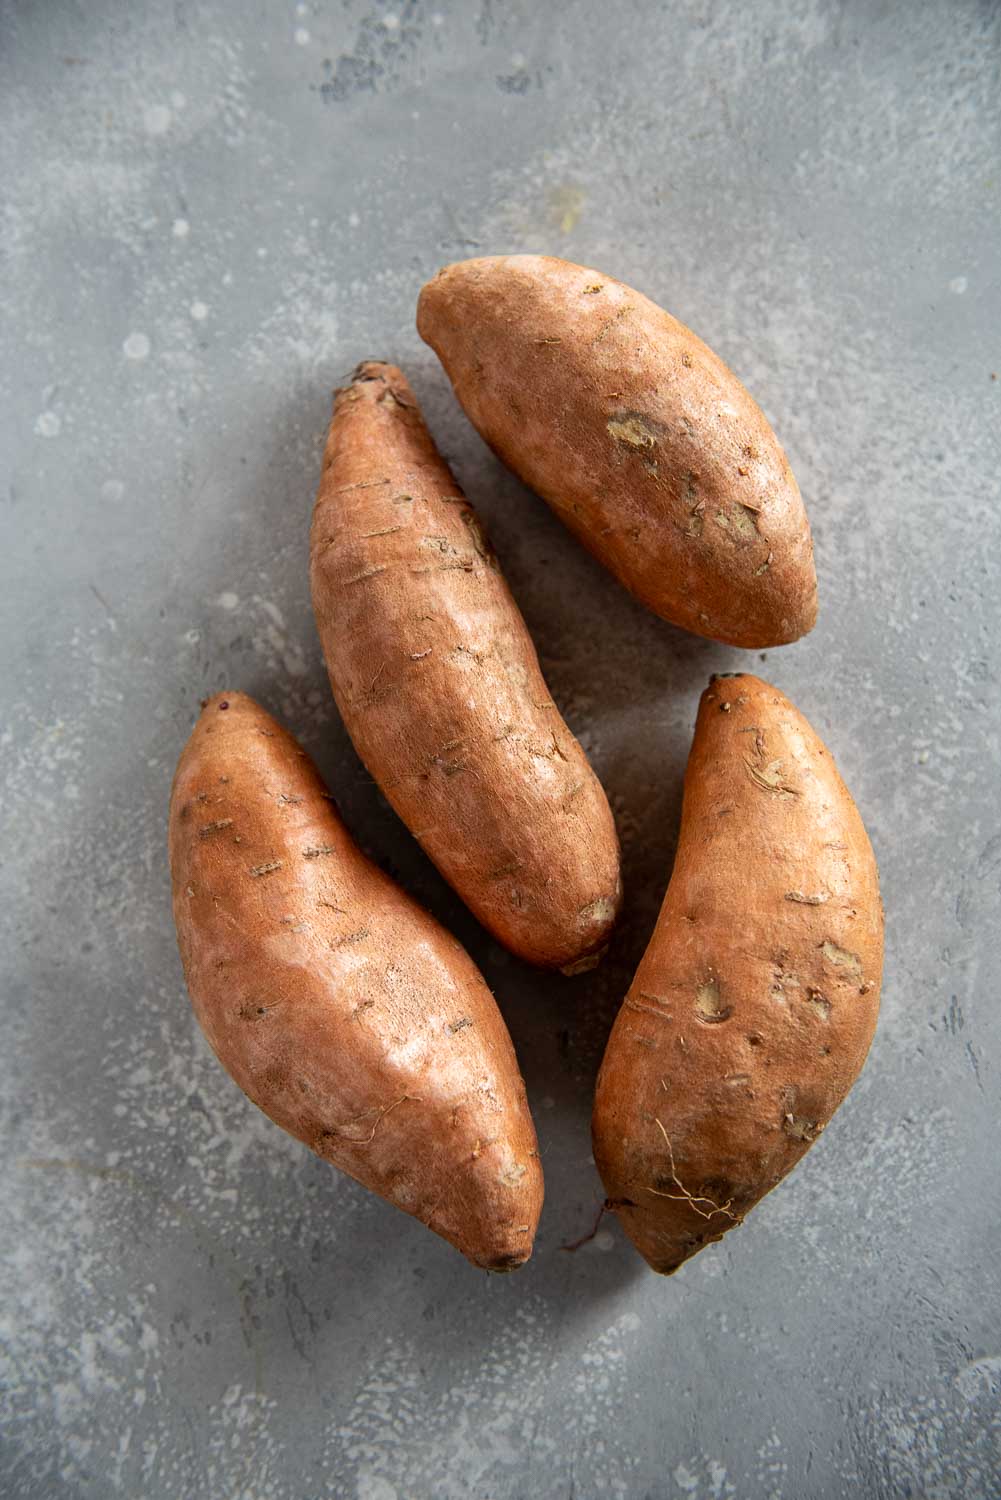 4 sweet potatoes on table